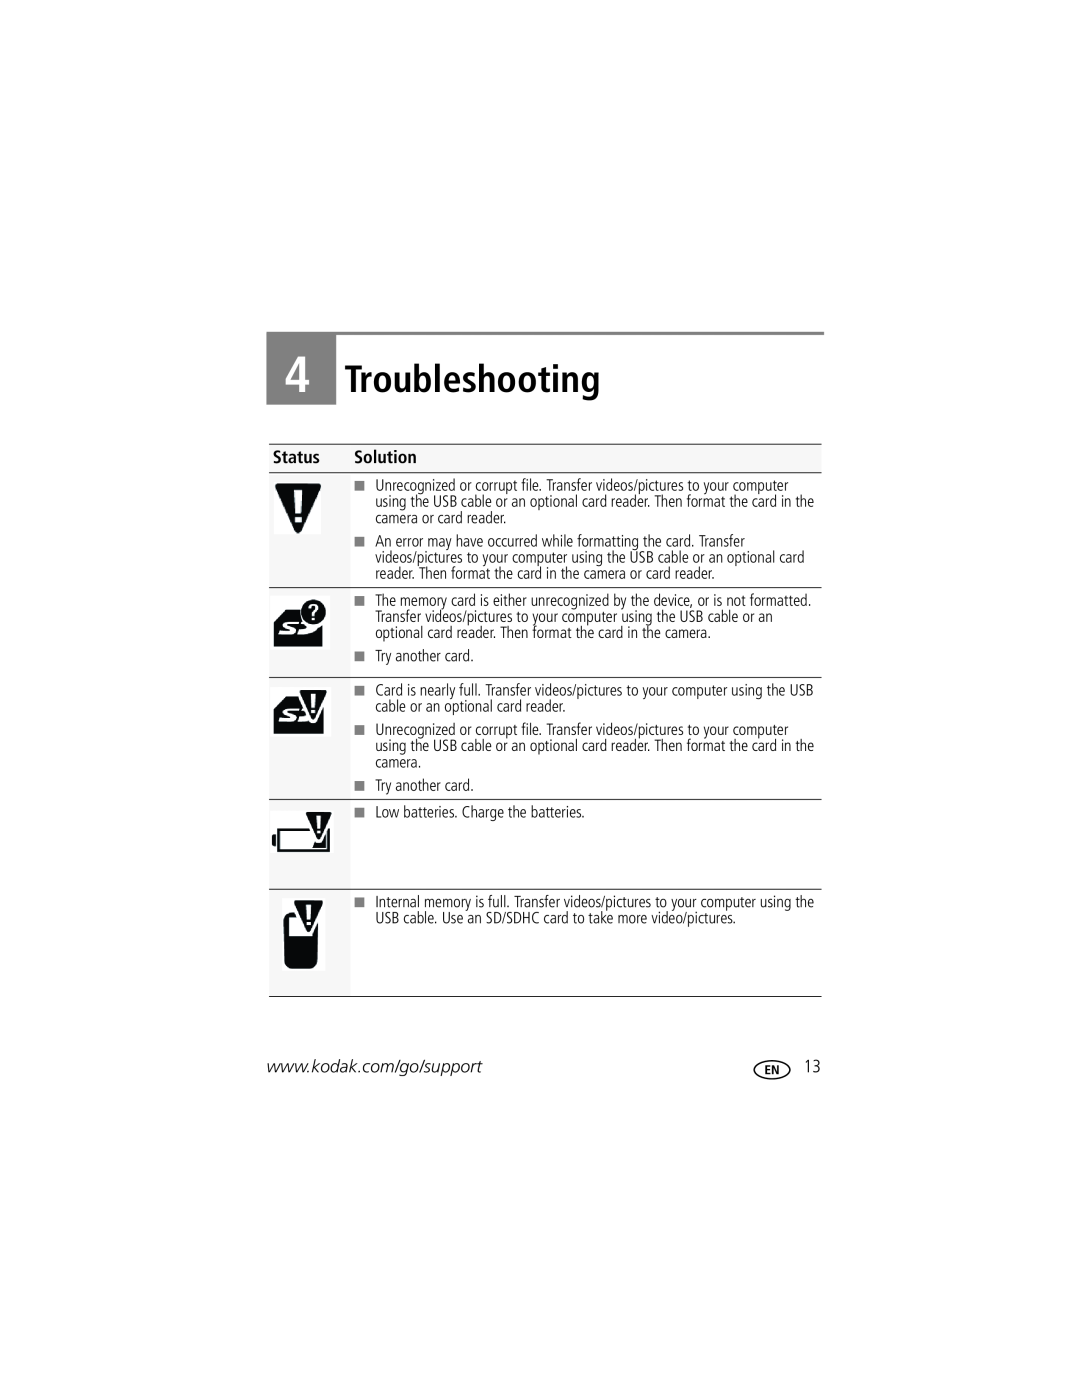 Kodak 1455013 manual Troubleshooting, Status Solution 